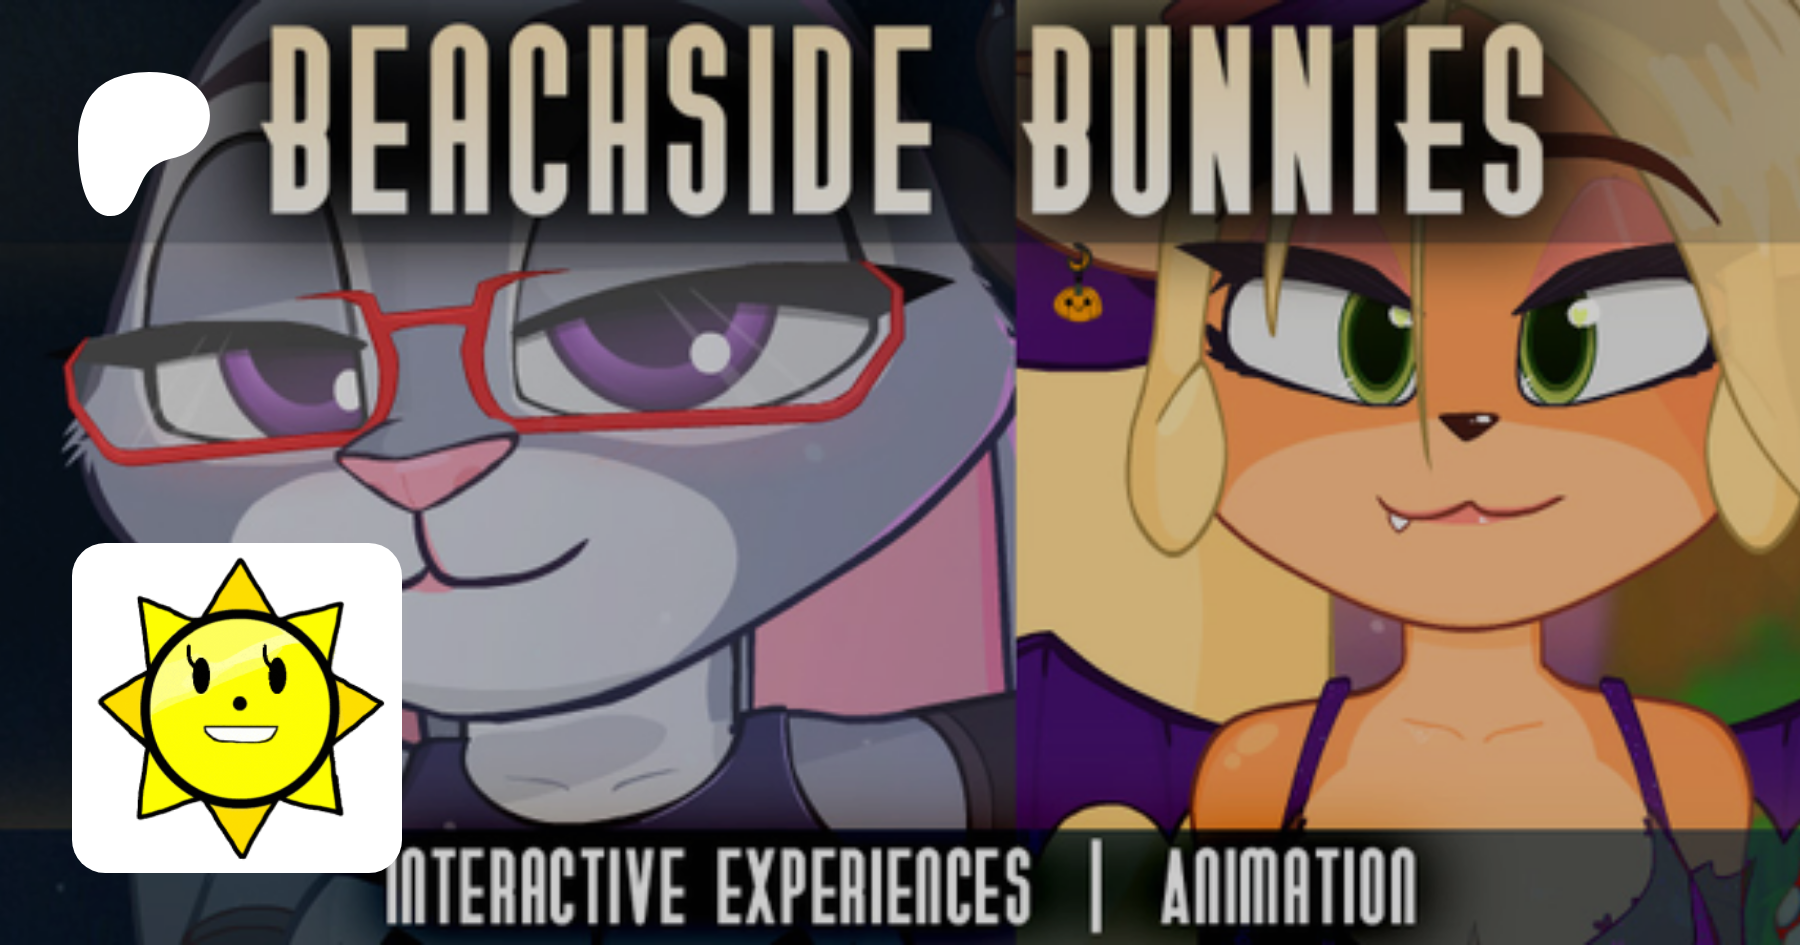 Beachside Bunnies | Creating Adult Games, Animation & Art | Patreon